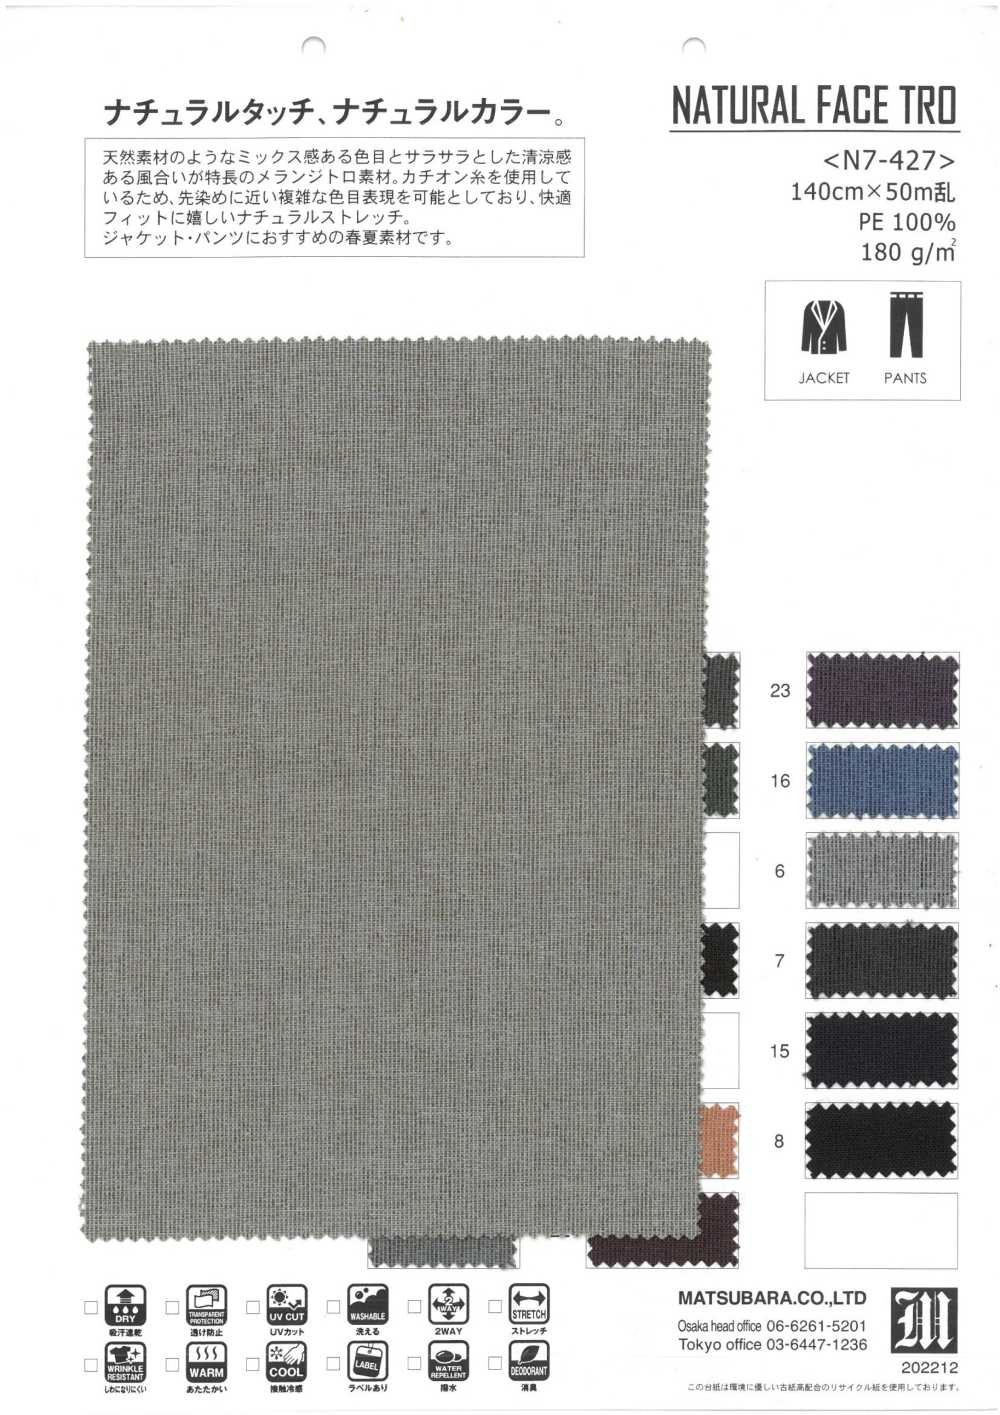 N7-427 TRO VISAGE NATUREL[Fabrication De Textile] Matsubara